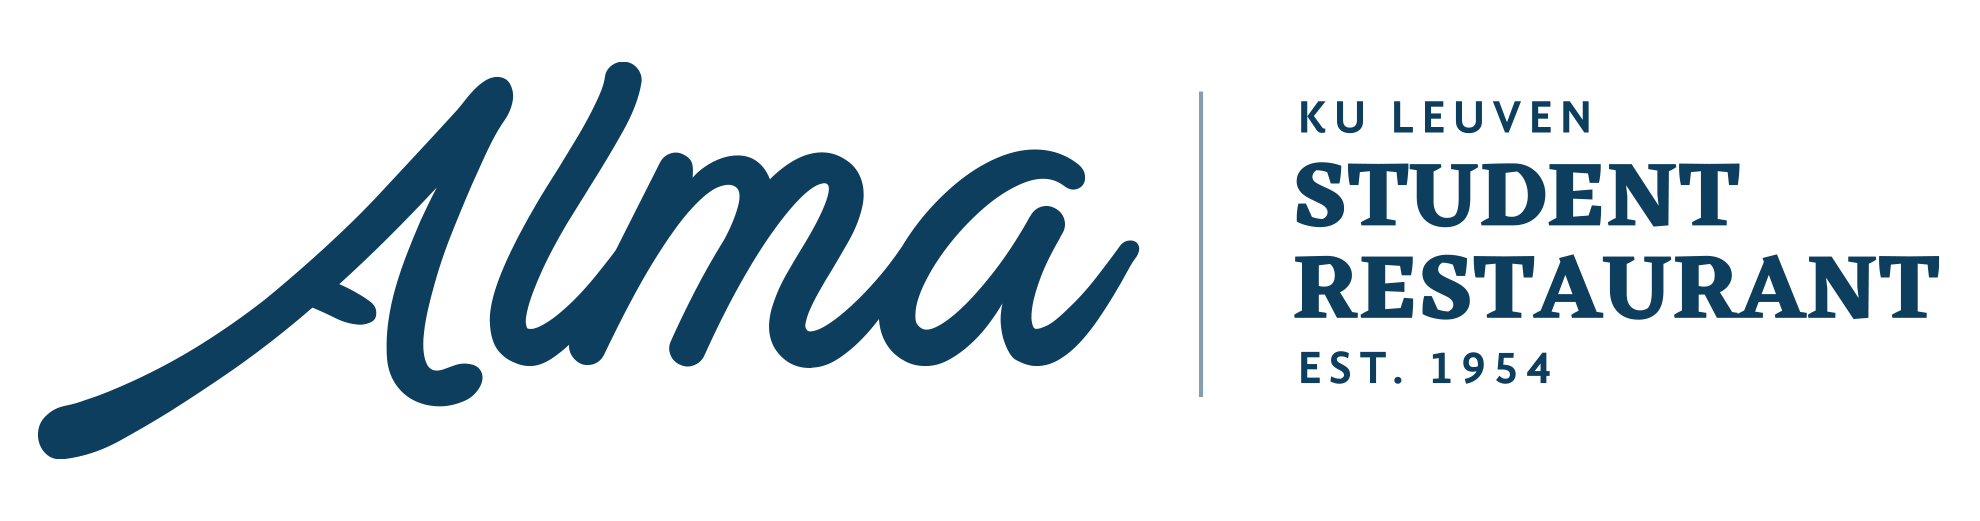 welkomstcoupons van alma use case logo